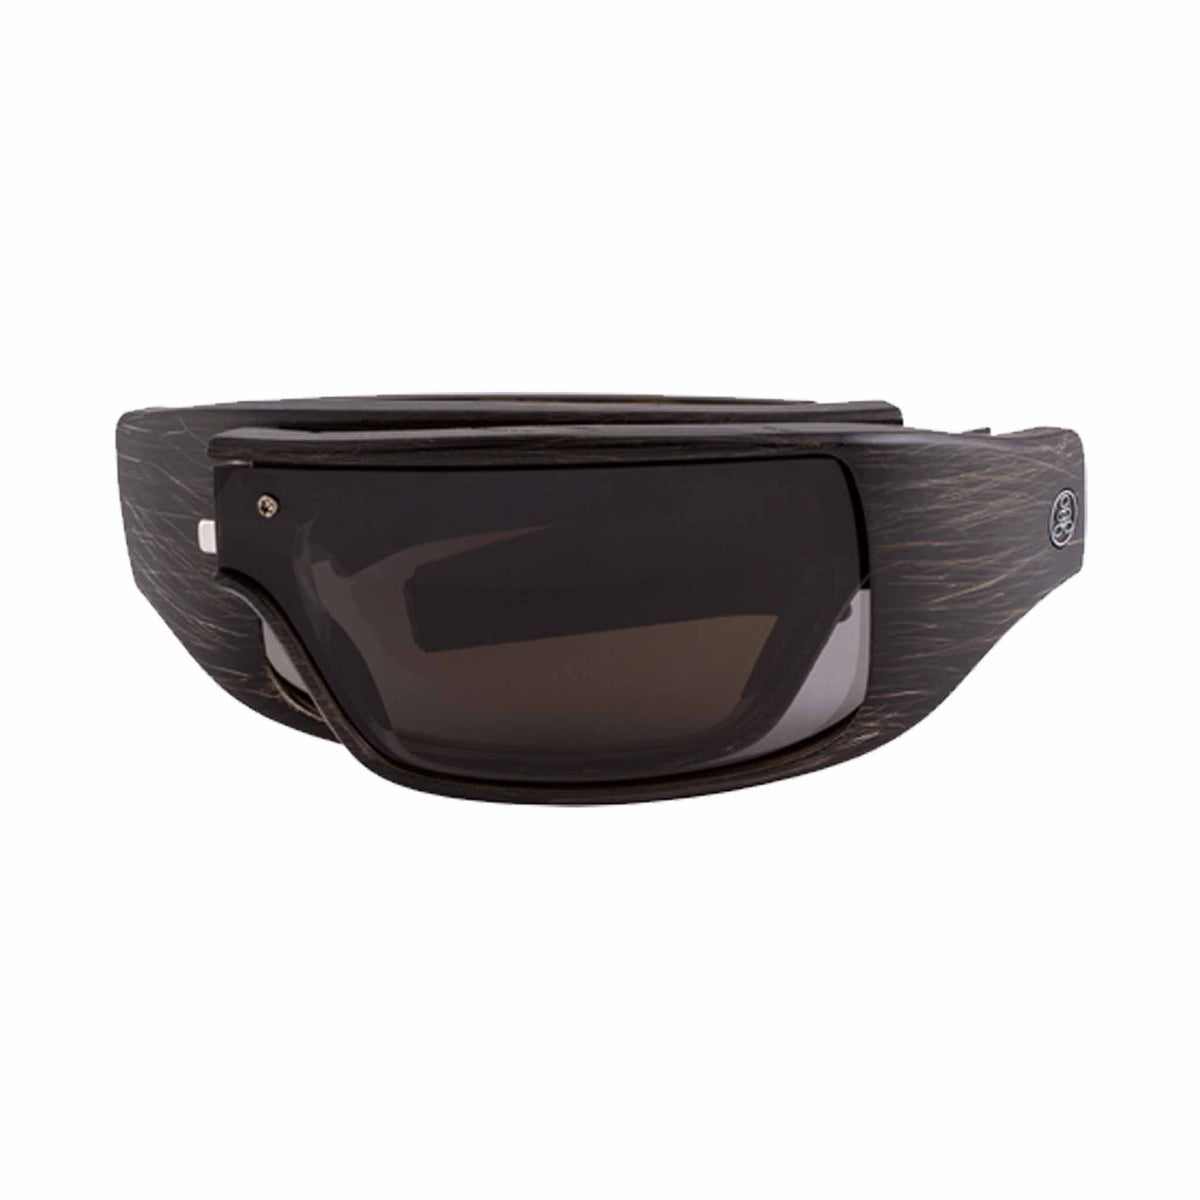 Popticals, Premium Compact Sunglasses, PopGear, 090050-ZUGP, Polarized Sunglasses, Matte Brush Black Frame , Gray Lenses, Compact View